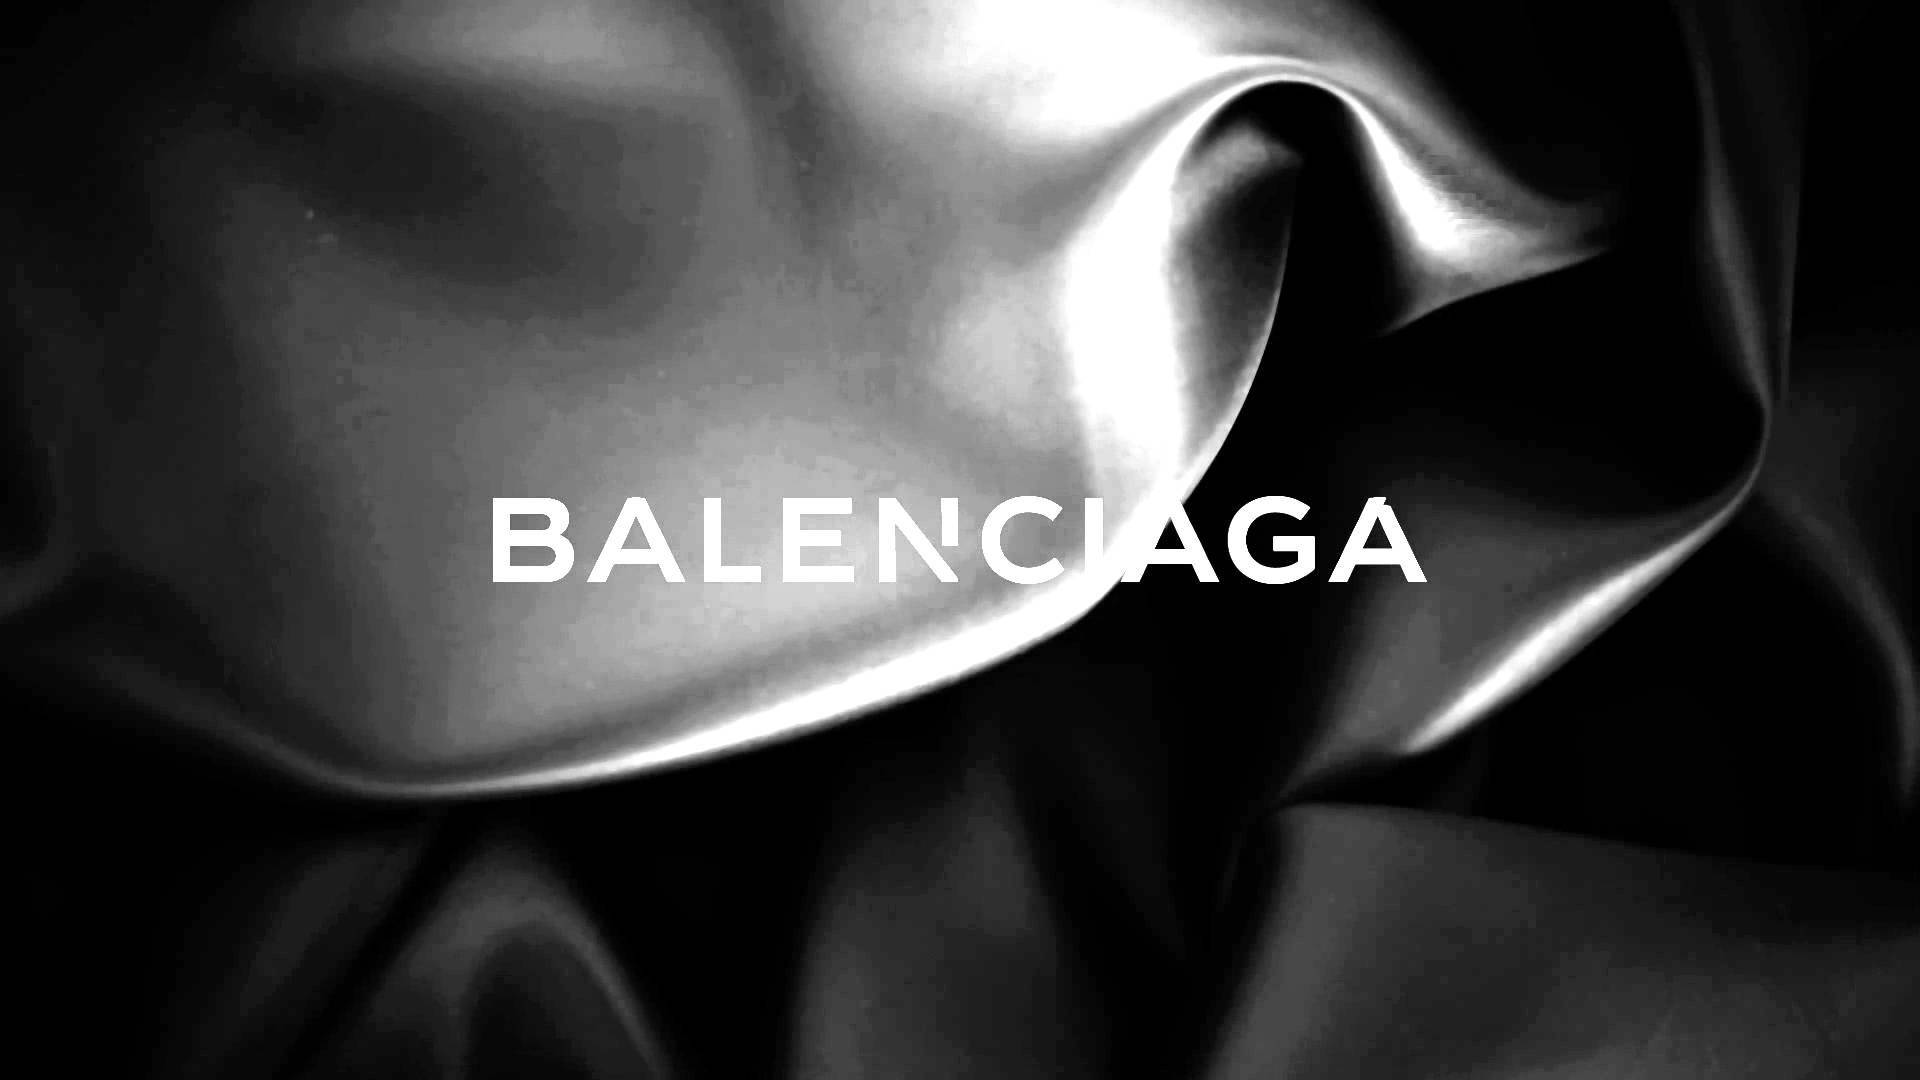 Balenciaga 1920X1080 Wallpaper and Background Image